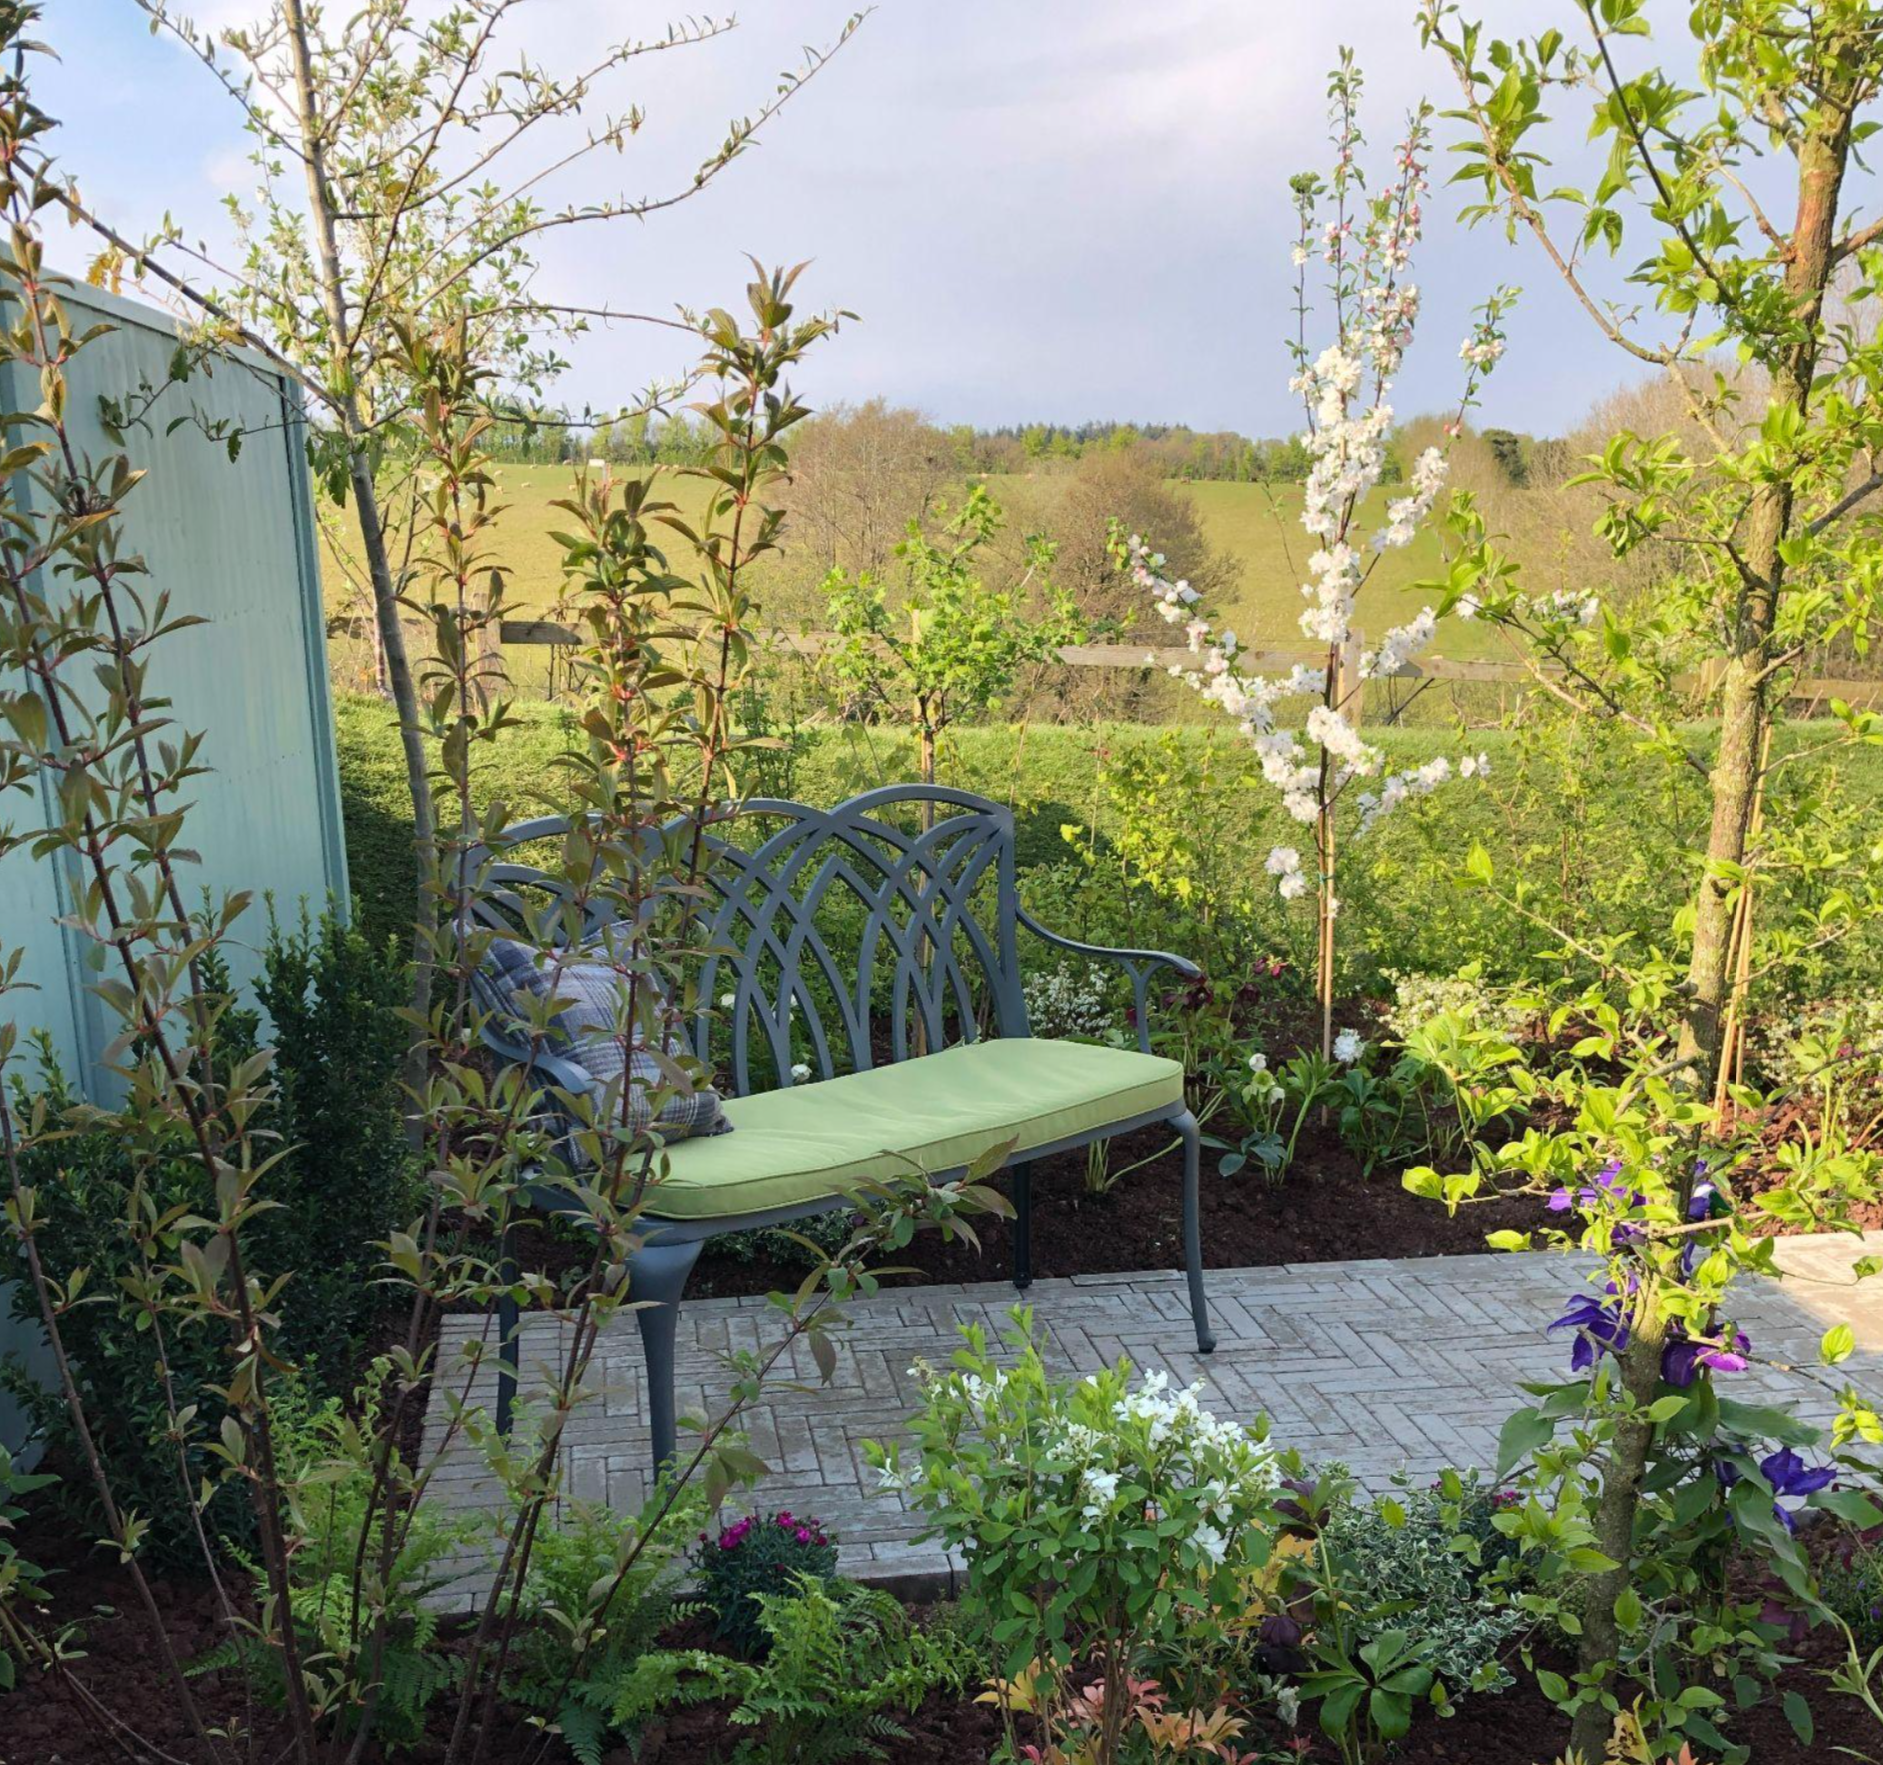 Our April Garden Bench on ITV's Love Your Garden